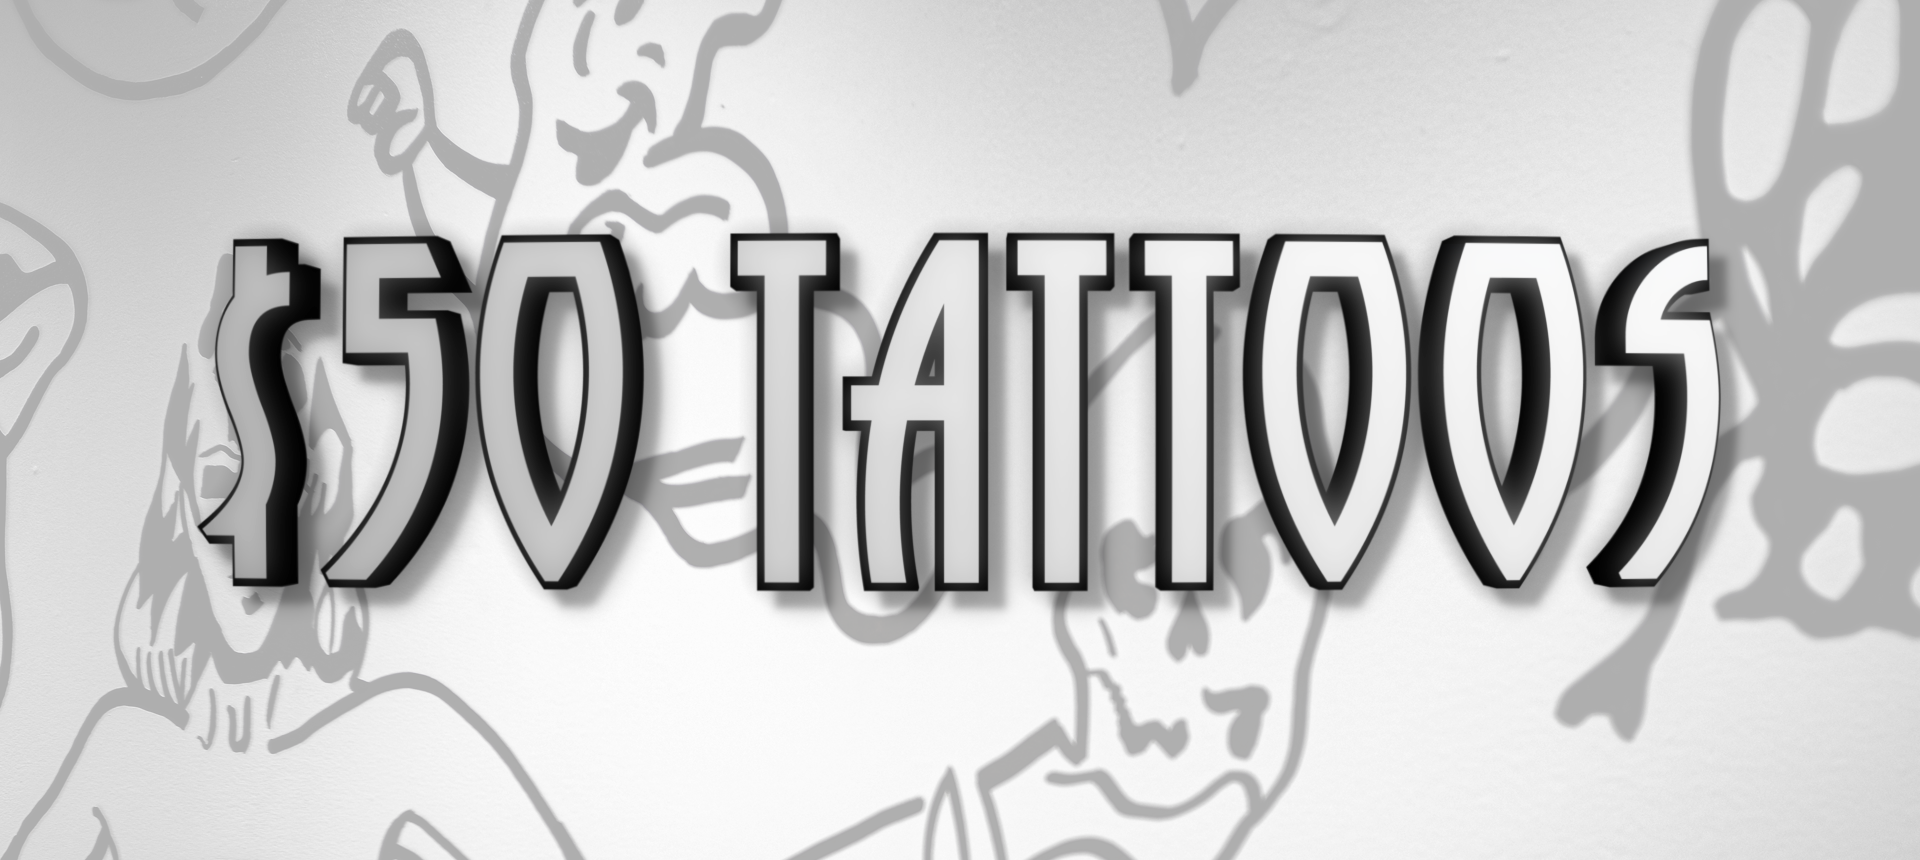 Live By The Sword Tattoo: Walk In Tattoos & Piercings, Brooklyn & Manhattan